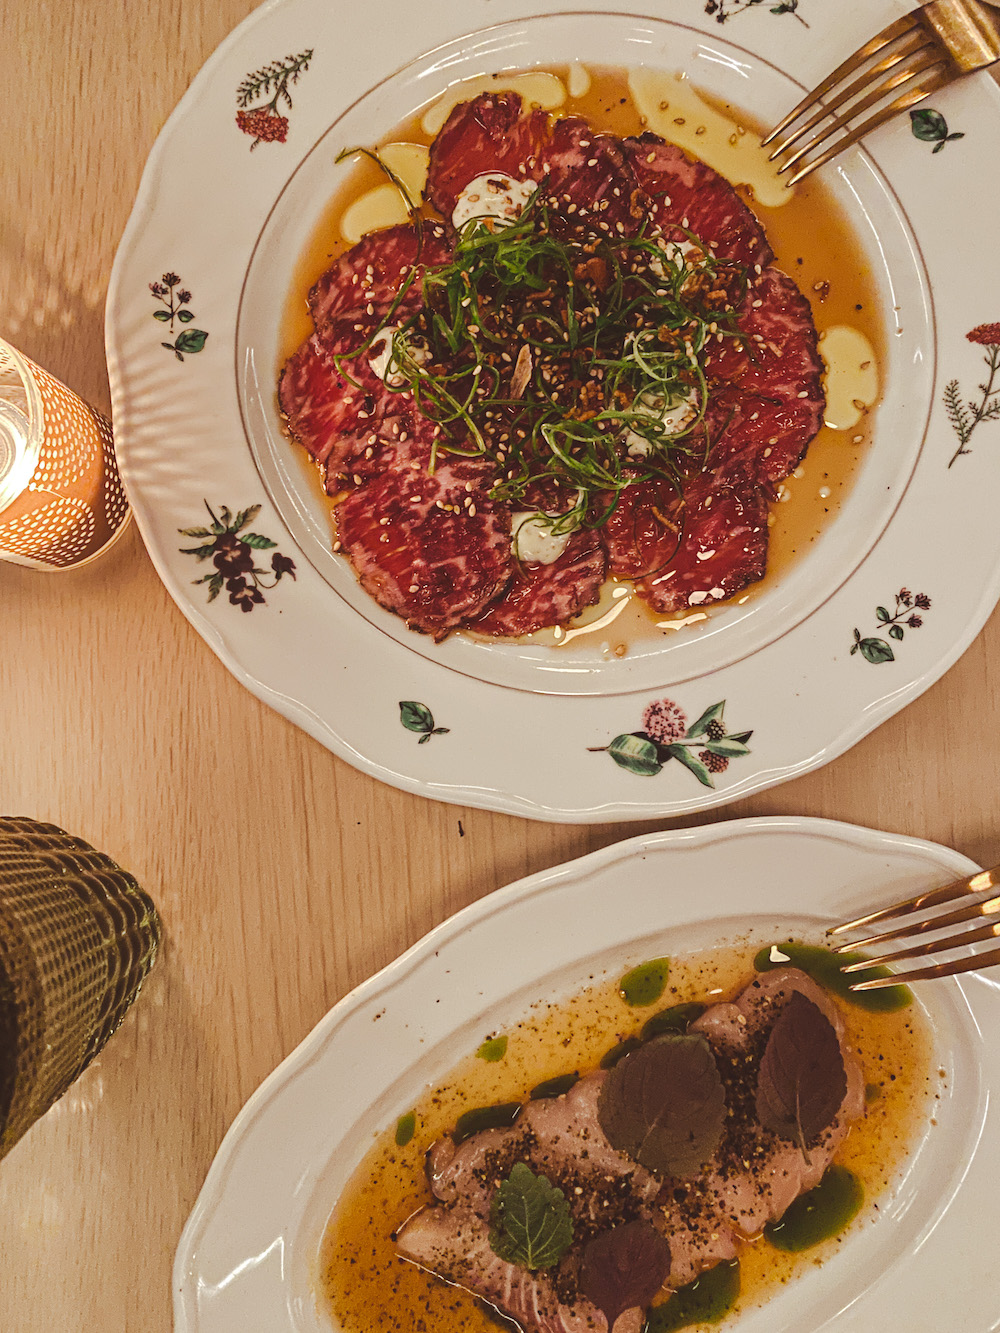 Beef and Fish Tataki at The Pearle Hotel and Spa restaurant. (Photo: Ayman Hbeichi)